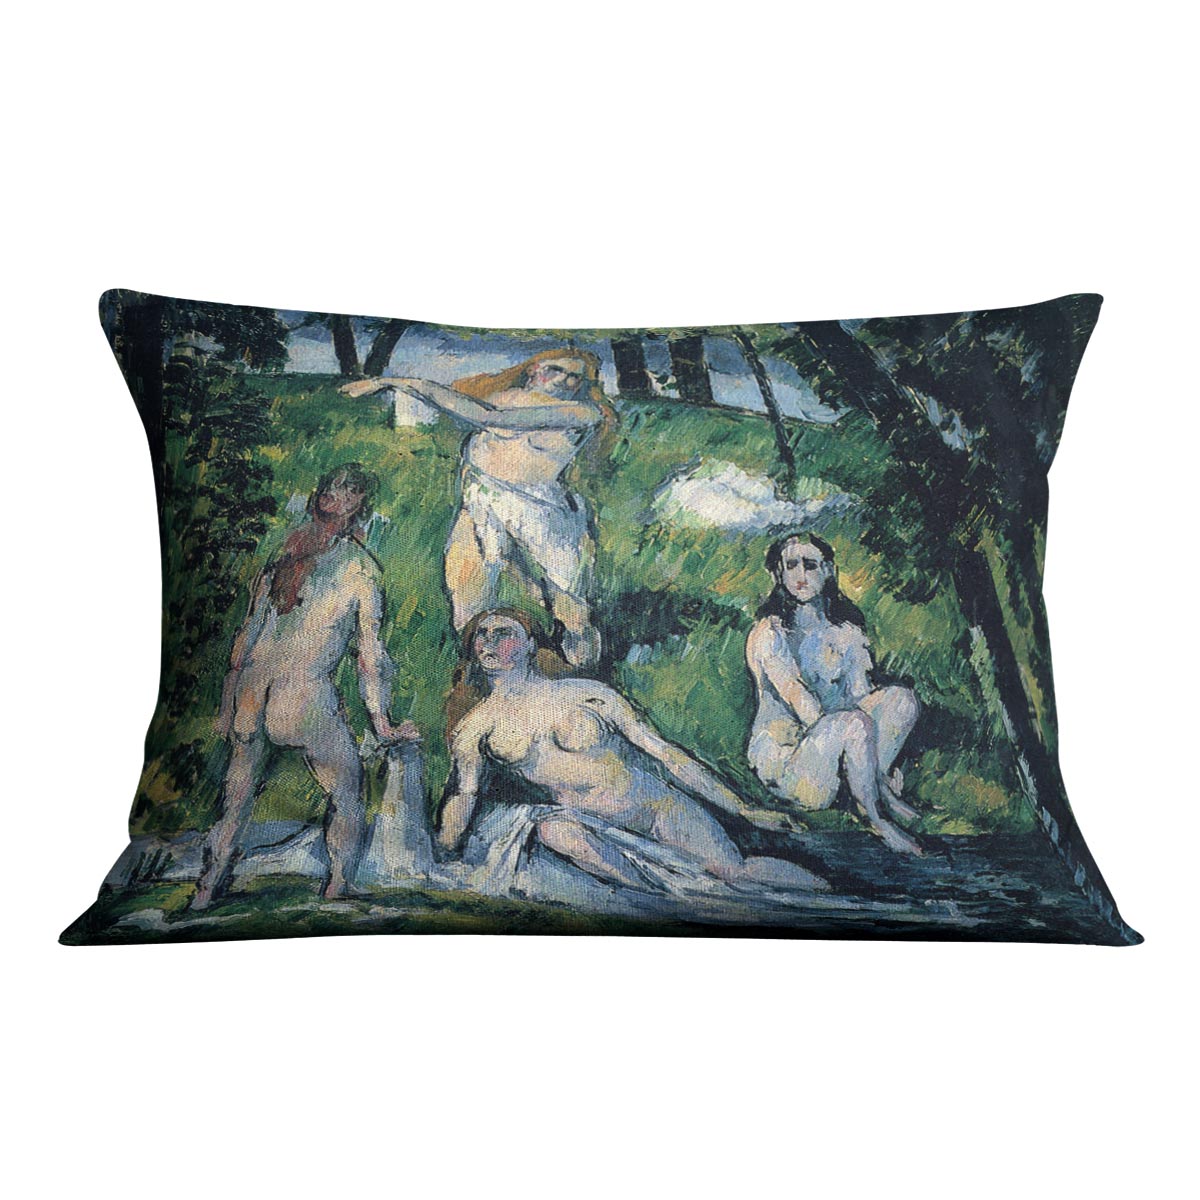 Bathers by Cezanne Cushion